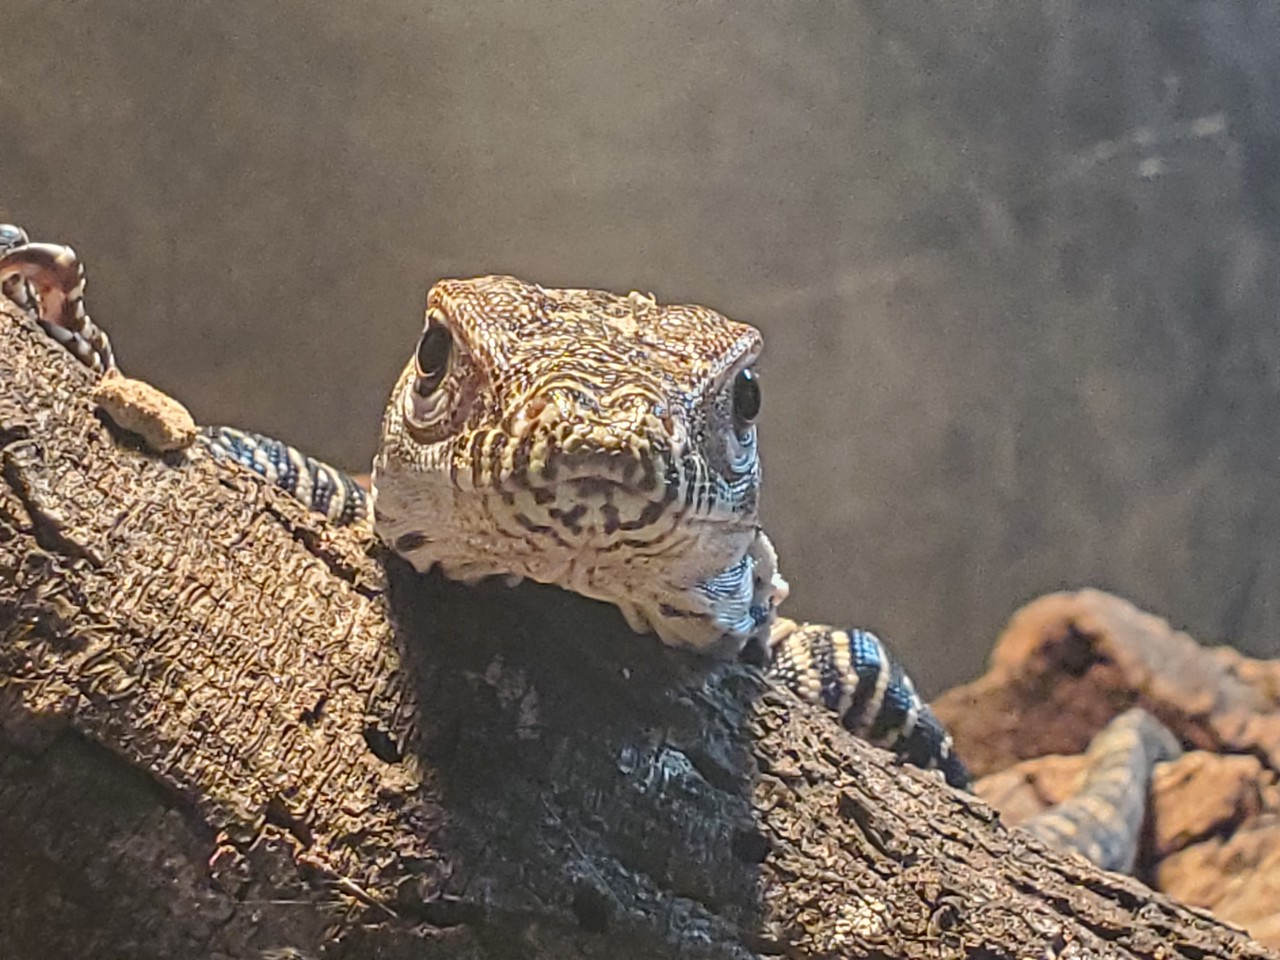 Baby Komodo Dragons hatched at the San Antonio Zoo!